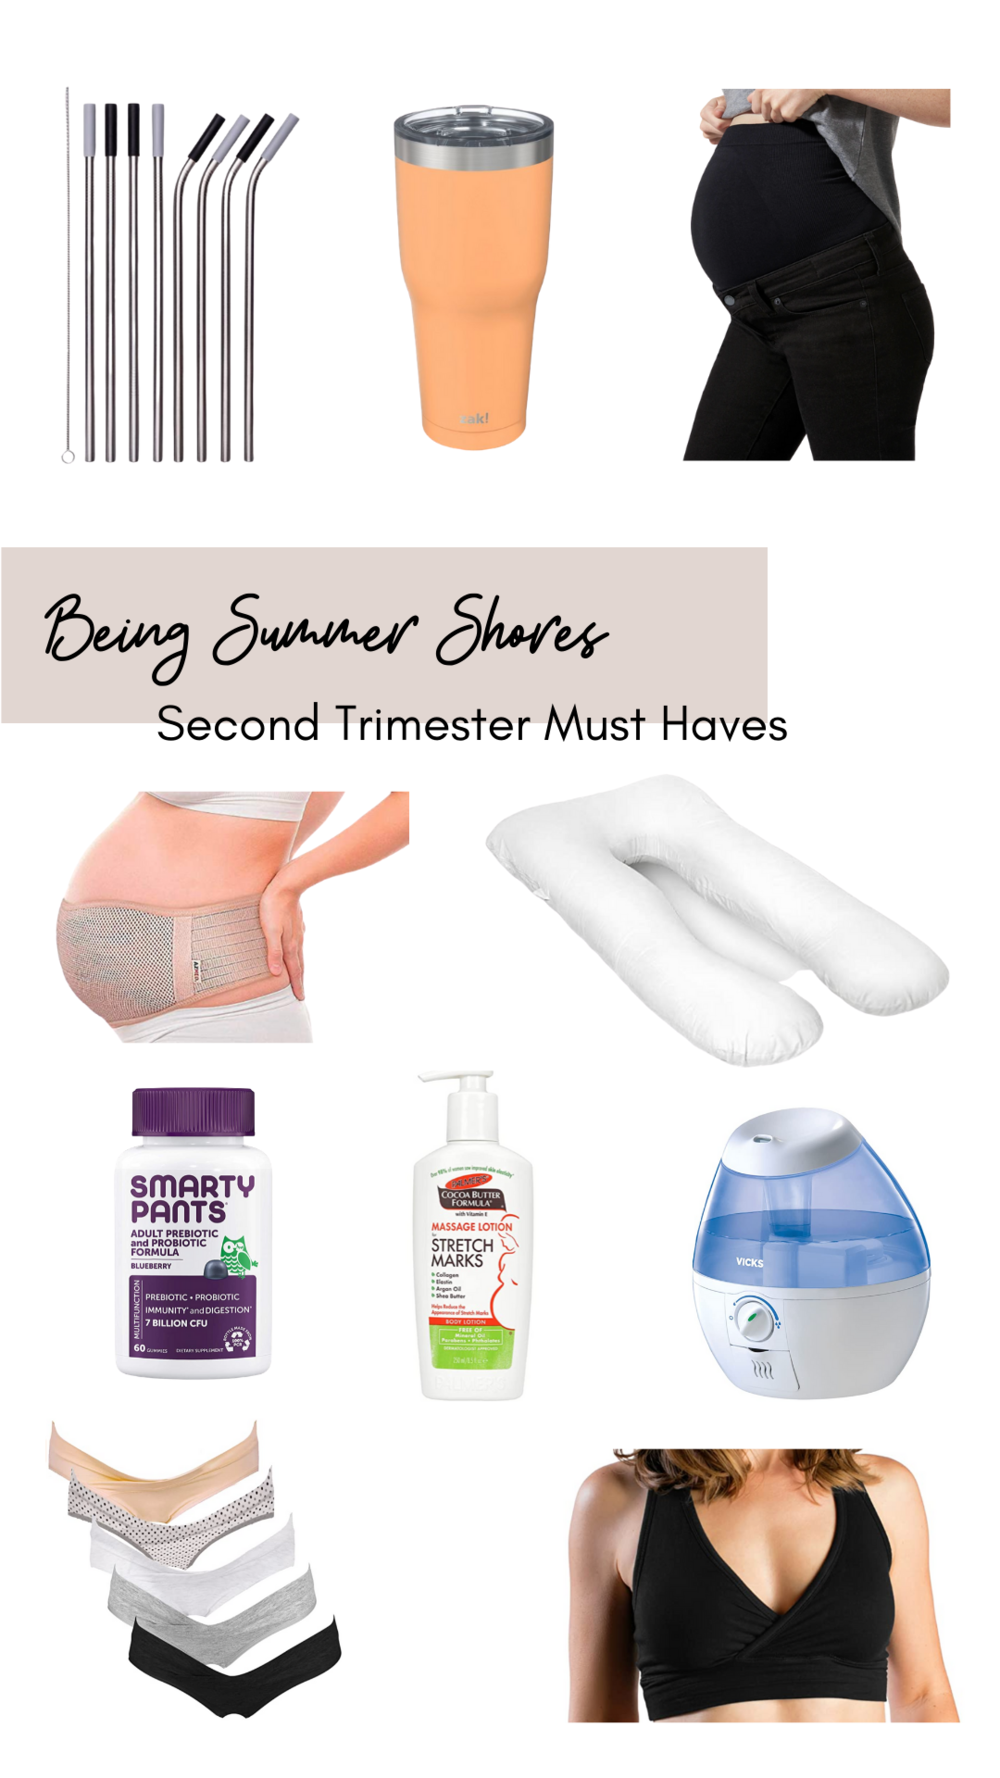 Hospital Bag Checklist - Being Summer Shores